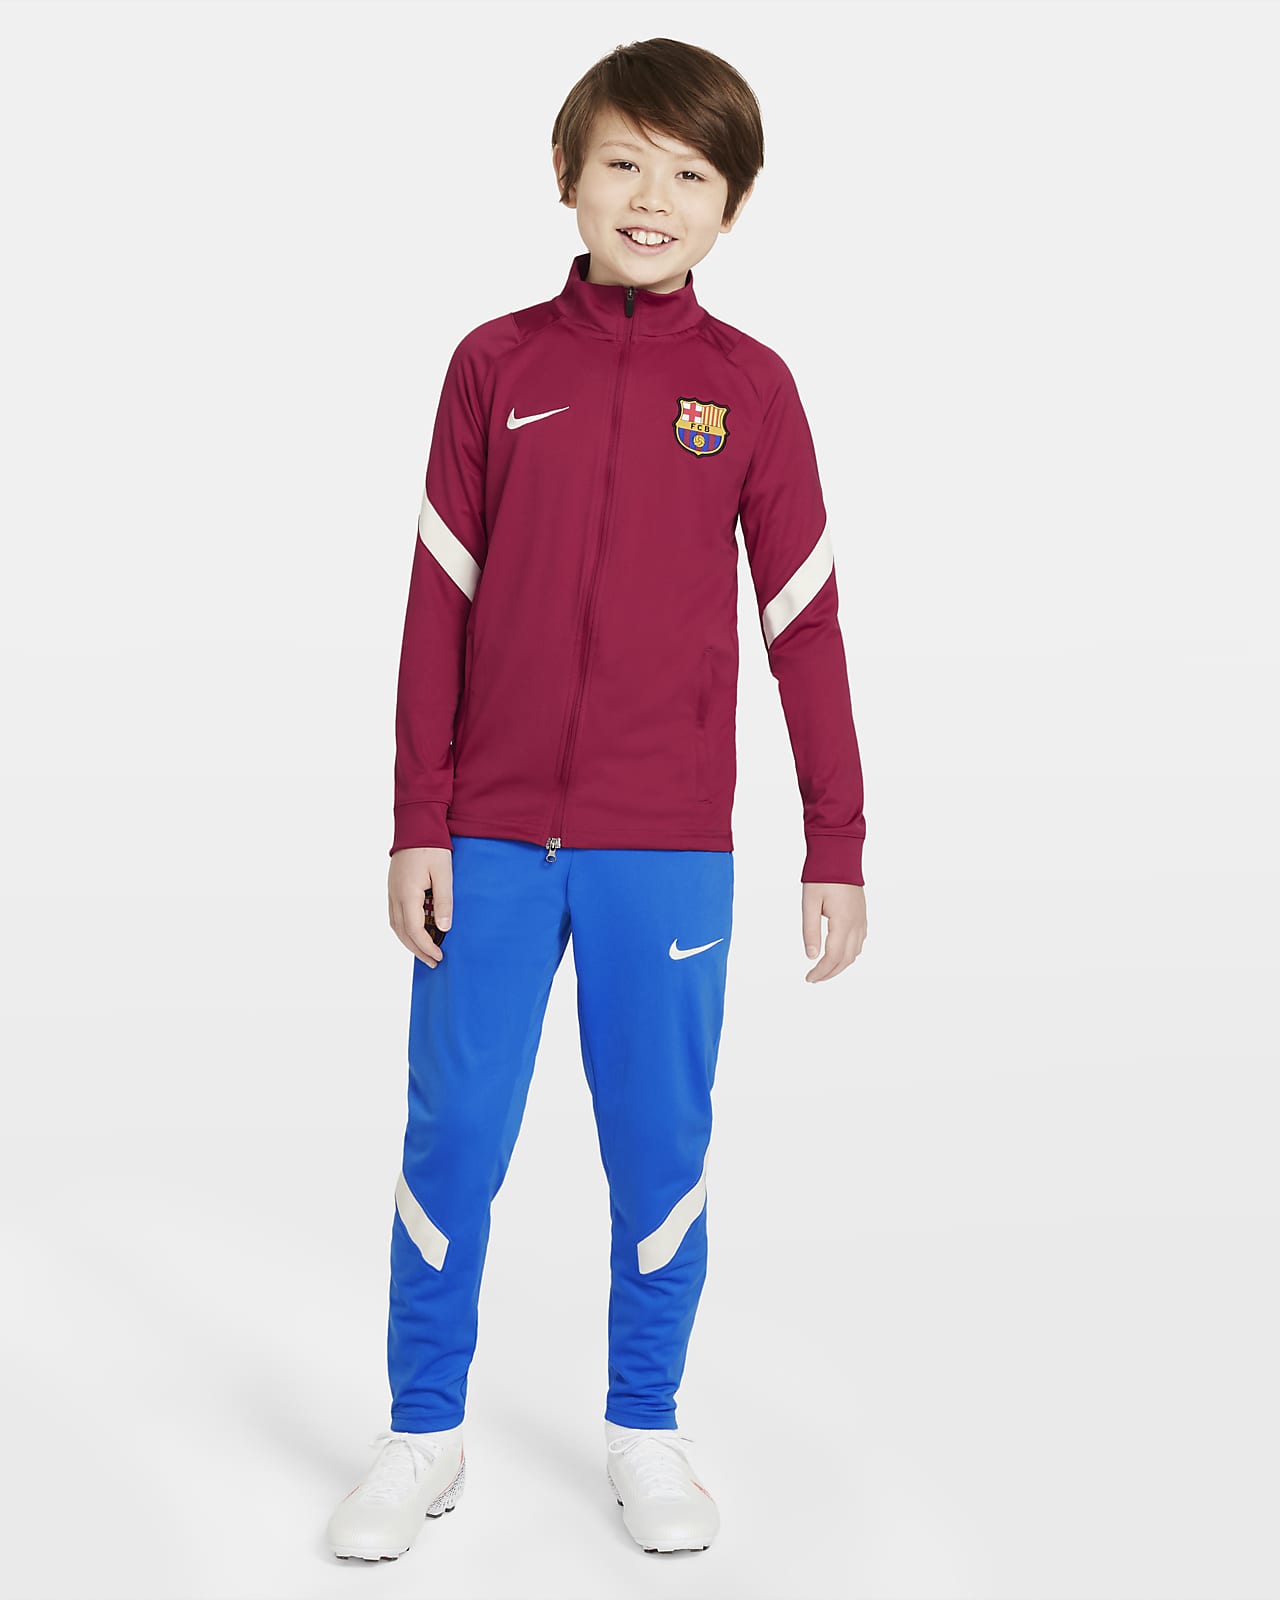 Fc barcelona trainingsanzug kinder - Die hochwertigsten Fc barcelona trainingsanzug kinder auf einen Blick!